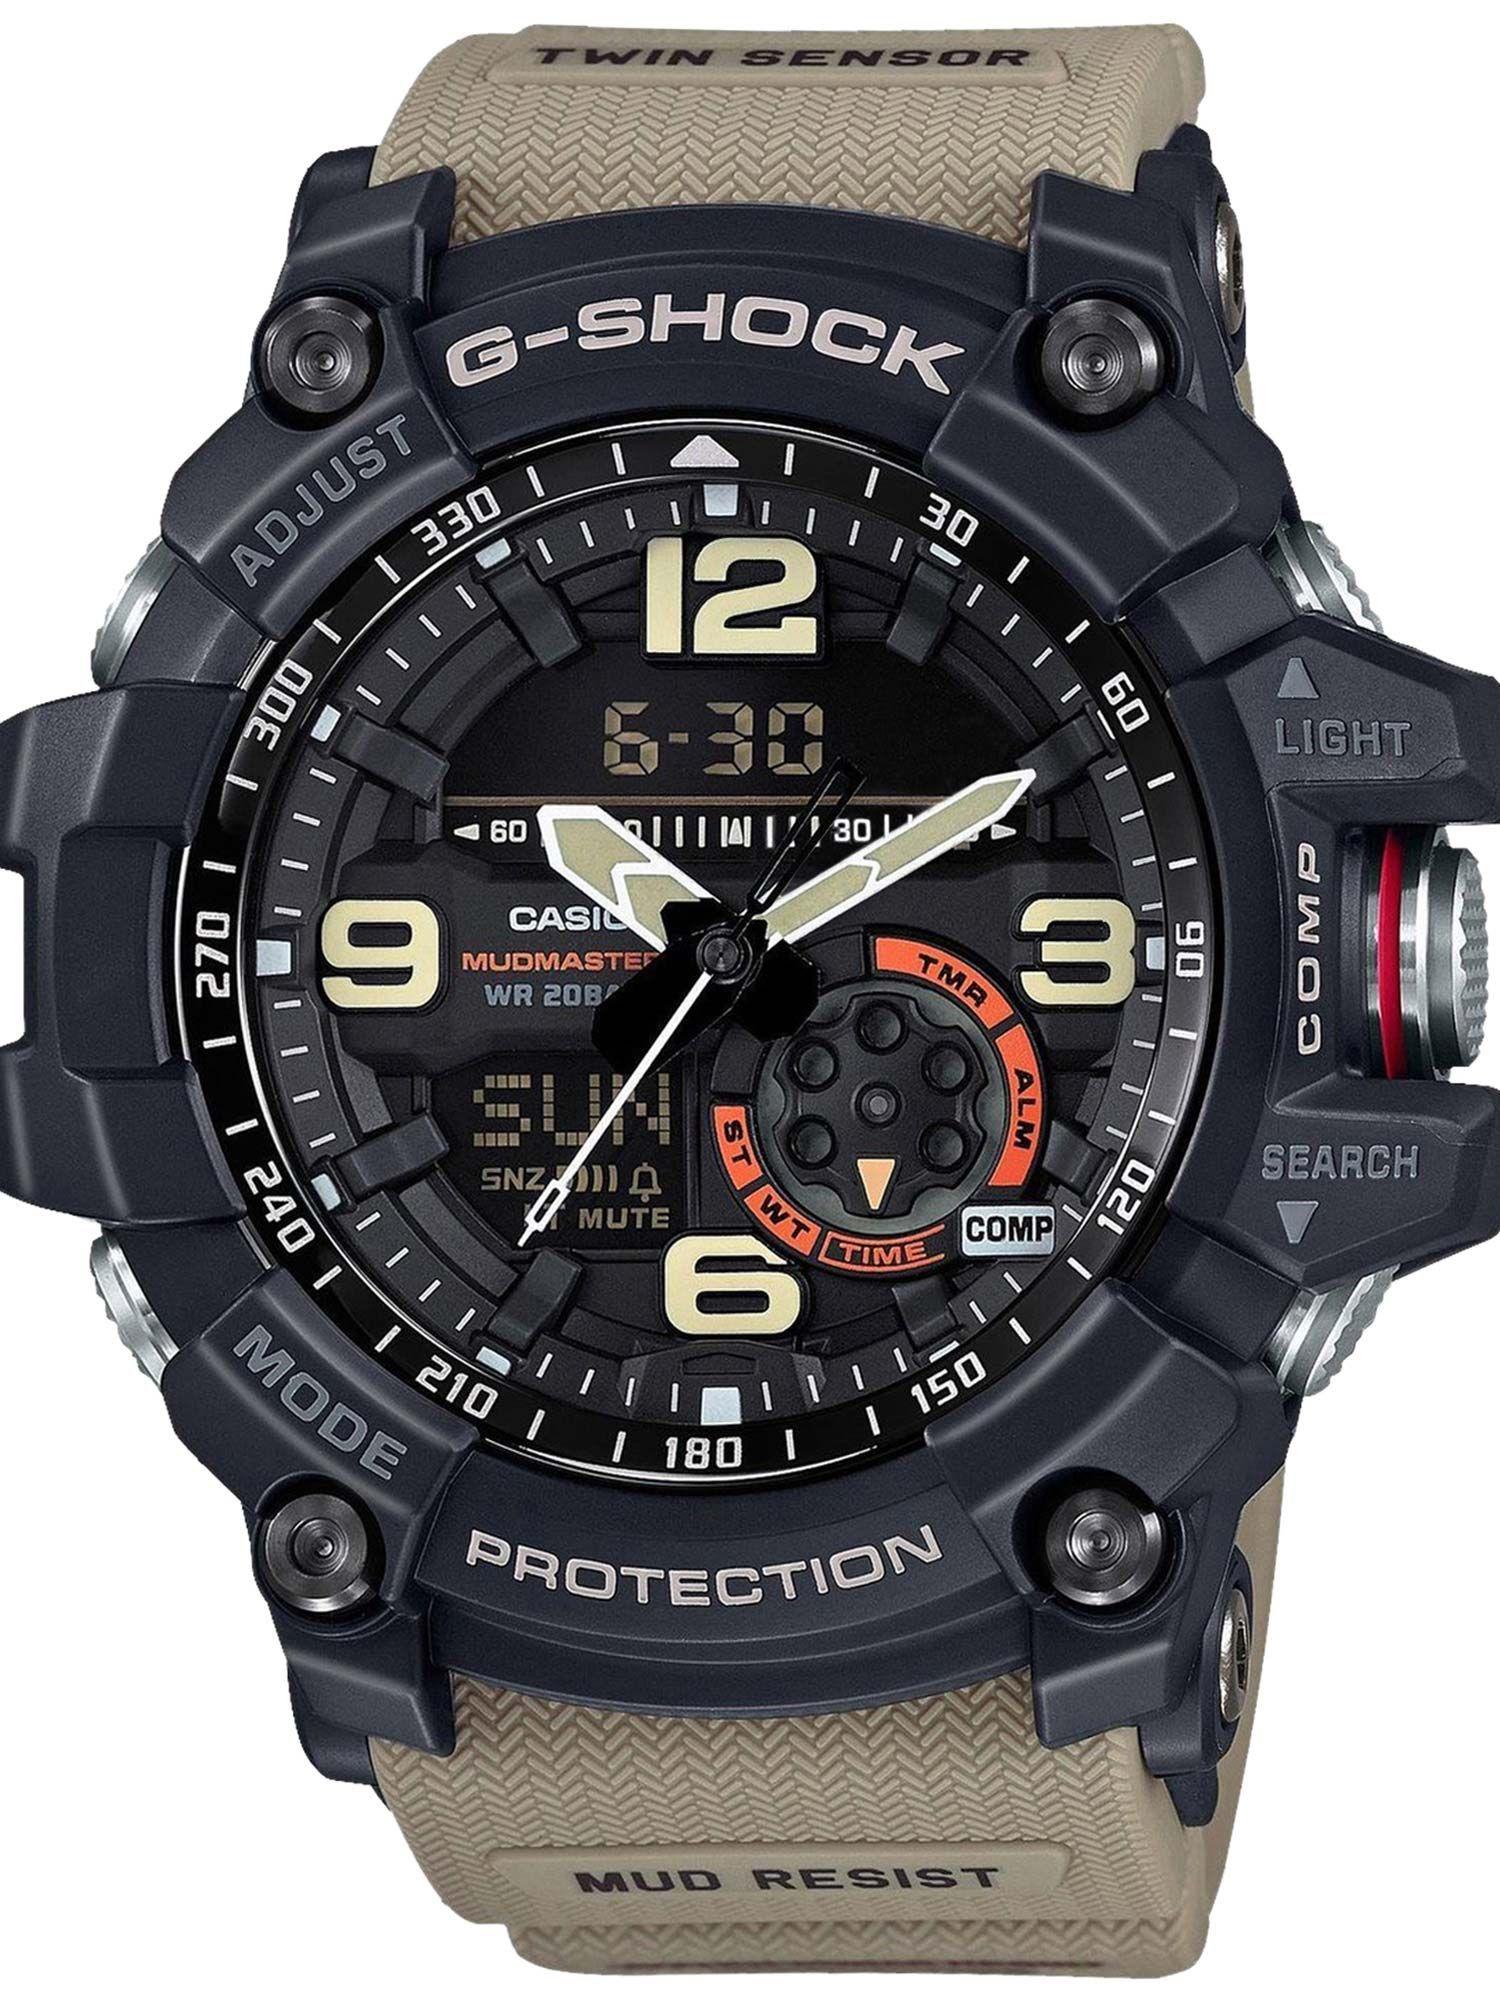 G661 G-Shock Gravity master ( GG-1000-1A5DR ) Analog-Digital Watch - For Men